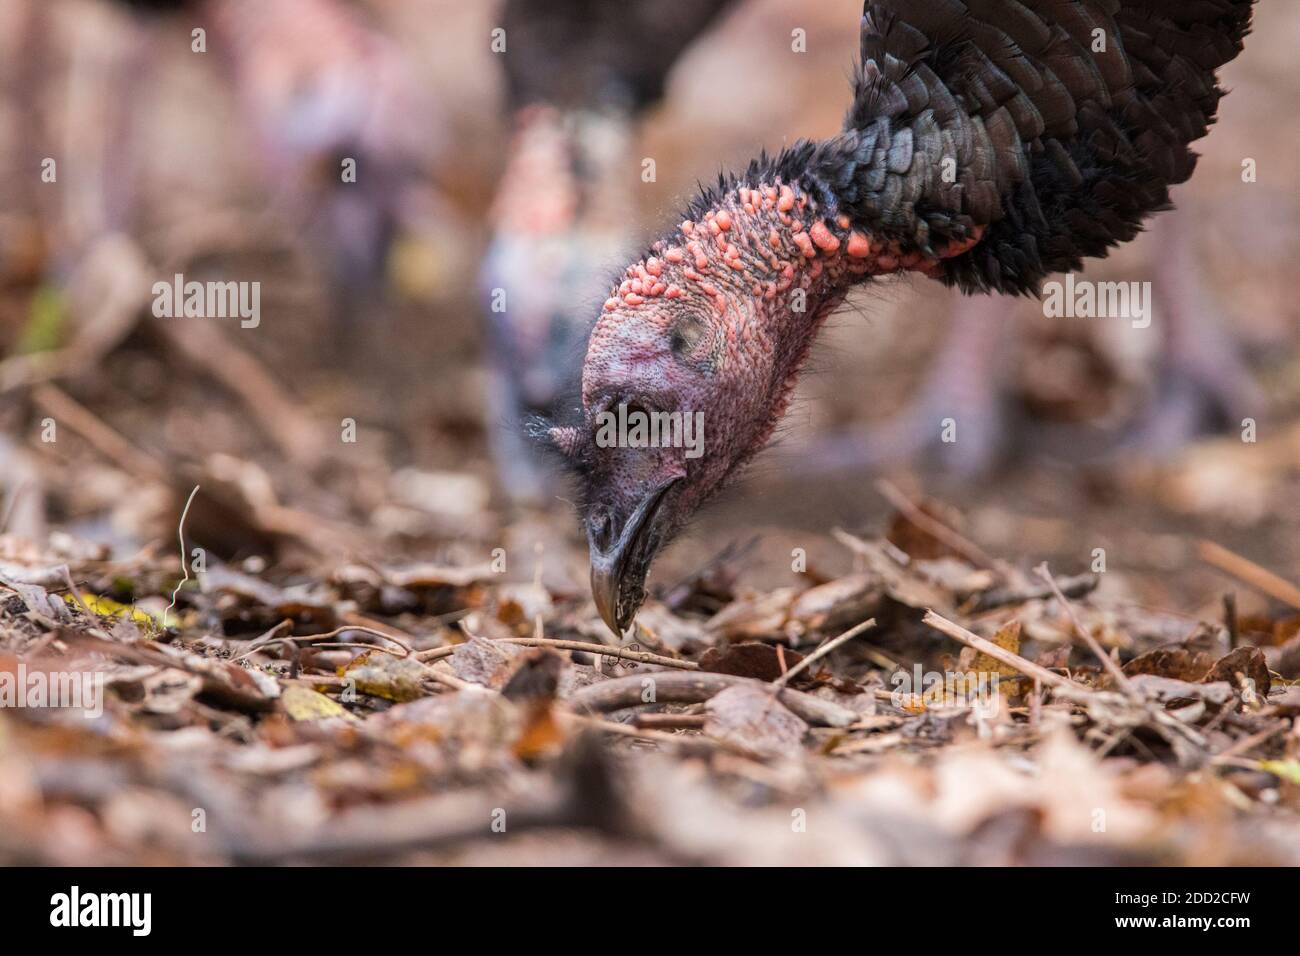 wild turkey feathers detail Stock Photo